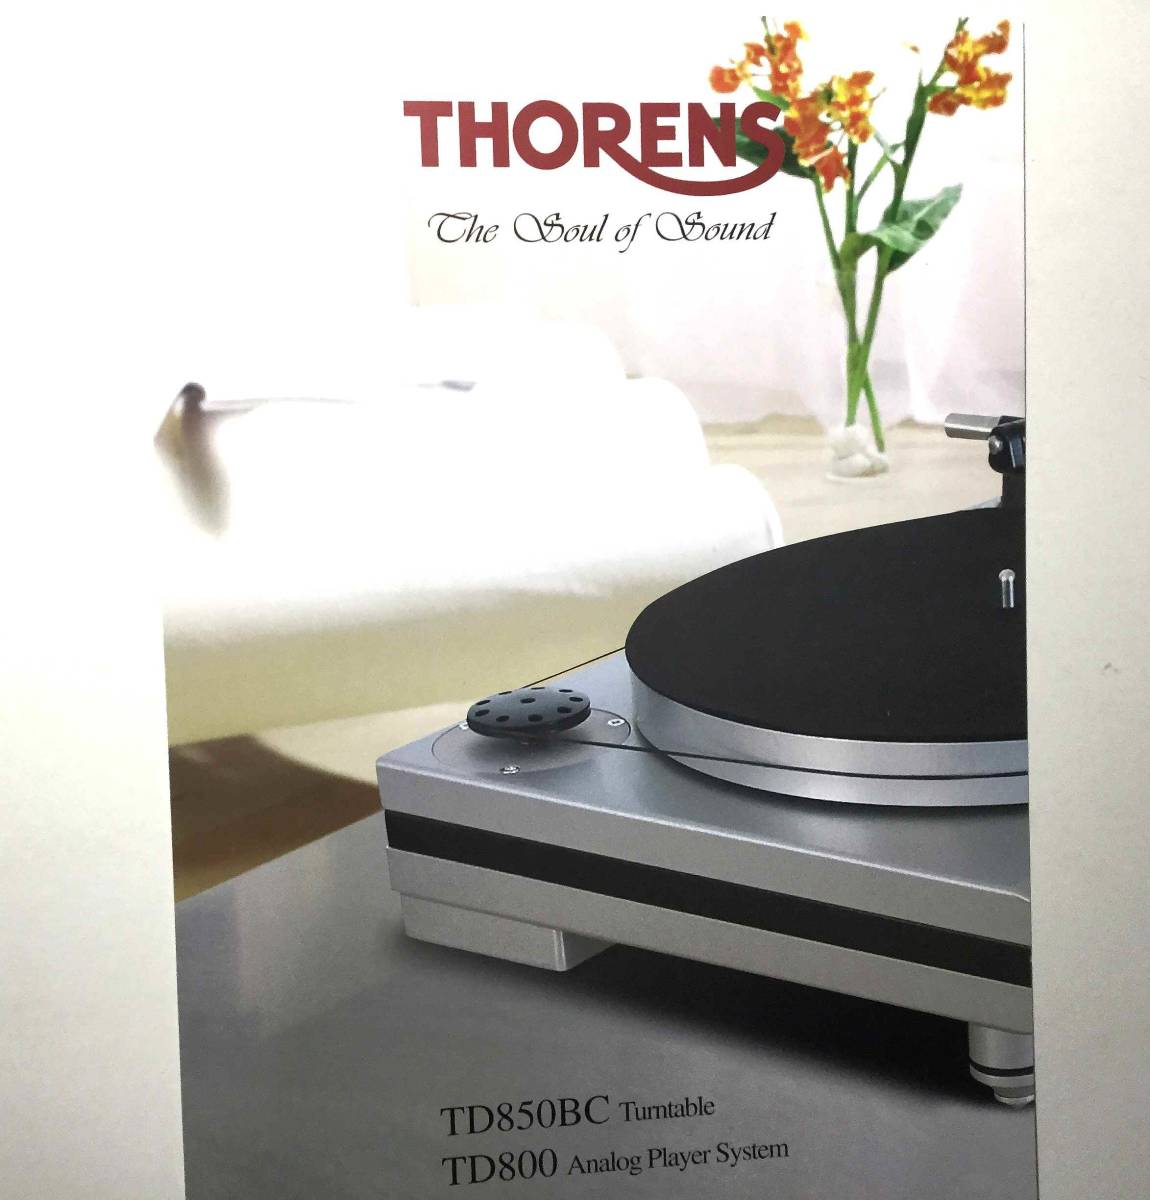 ★★★ THORENS /Tolence TD850BC /TD800 &lt;Single item catalog&gt; 2003 edition